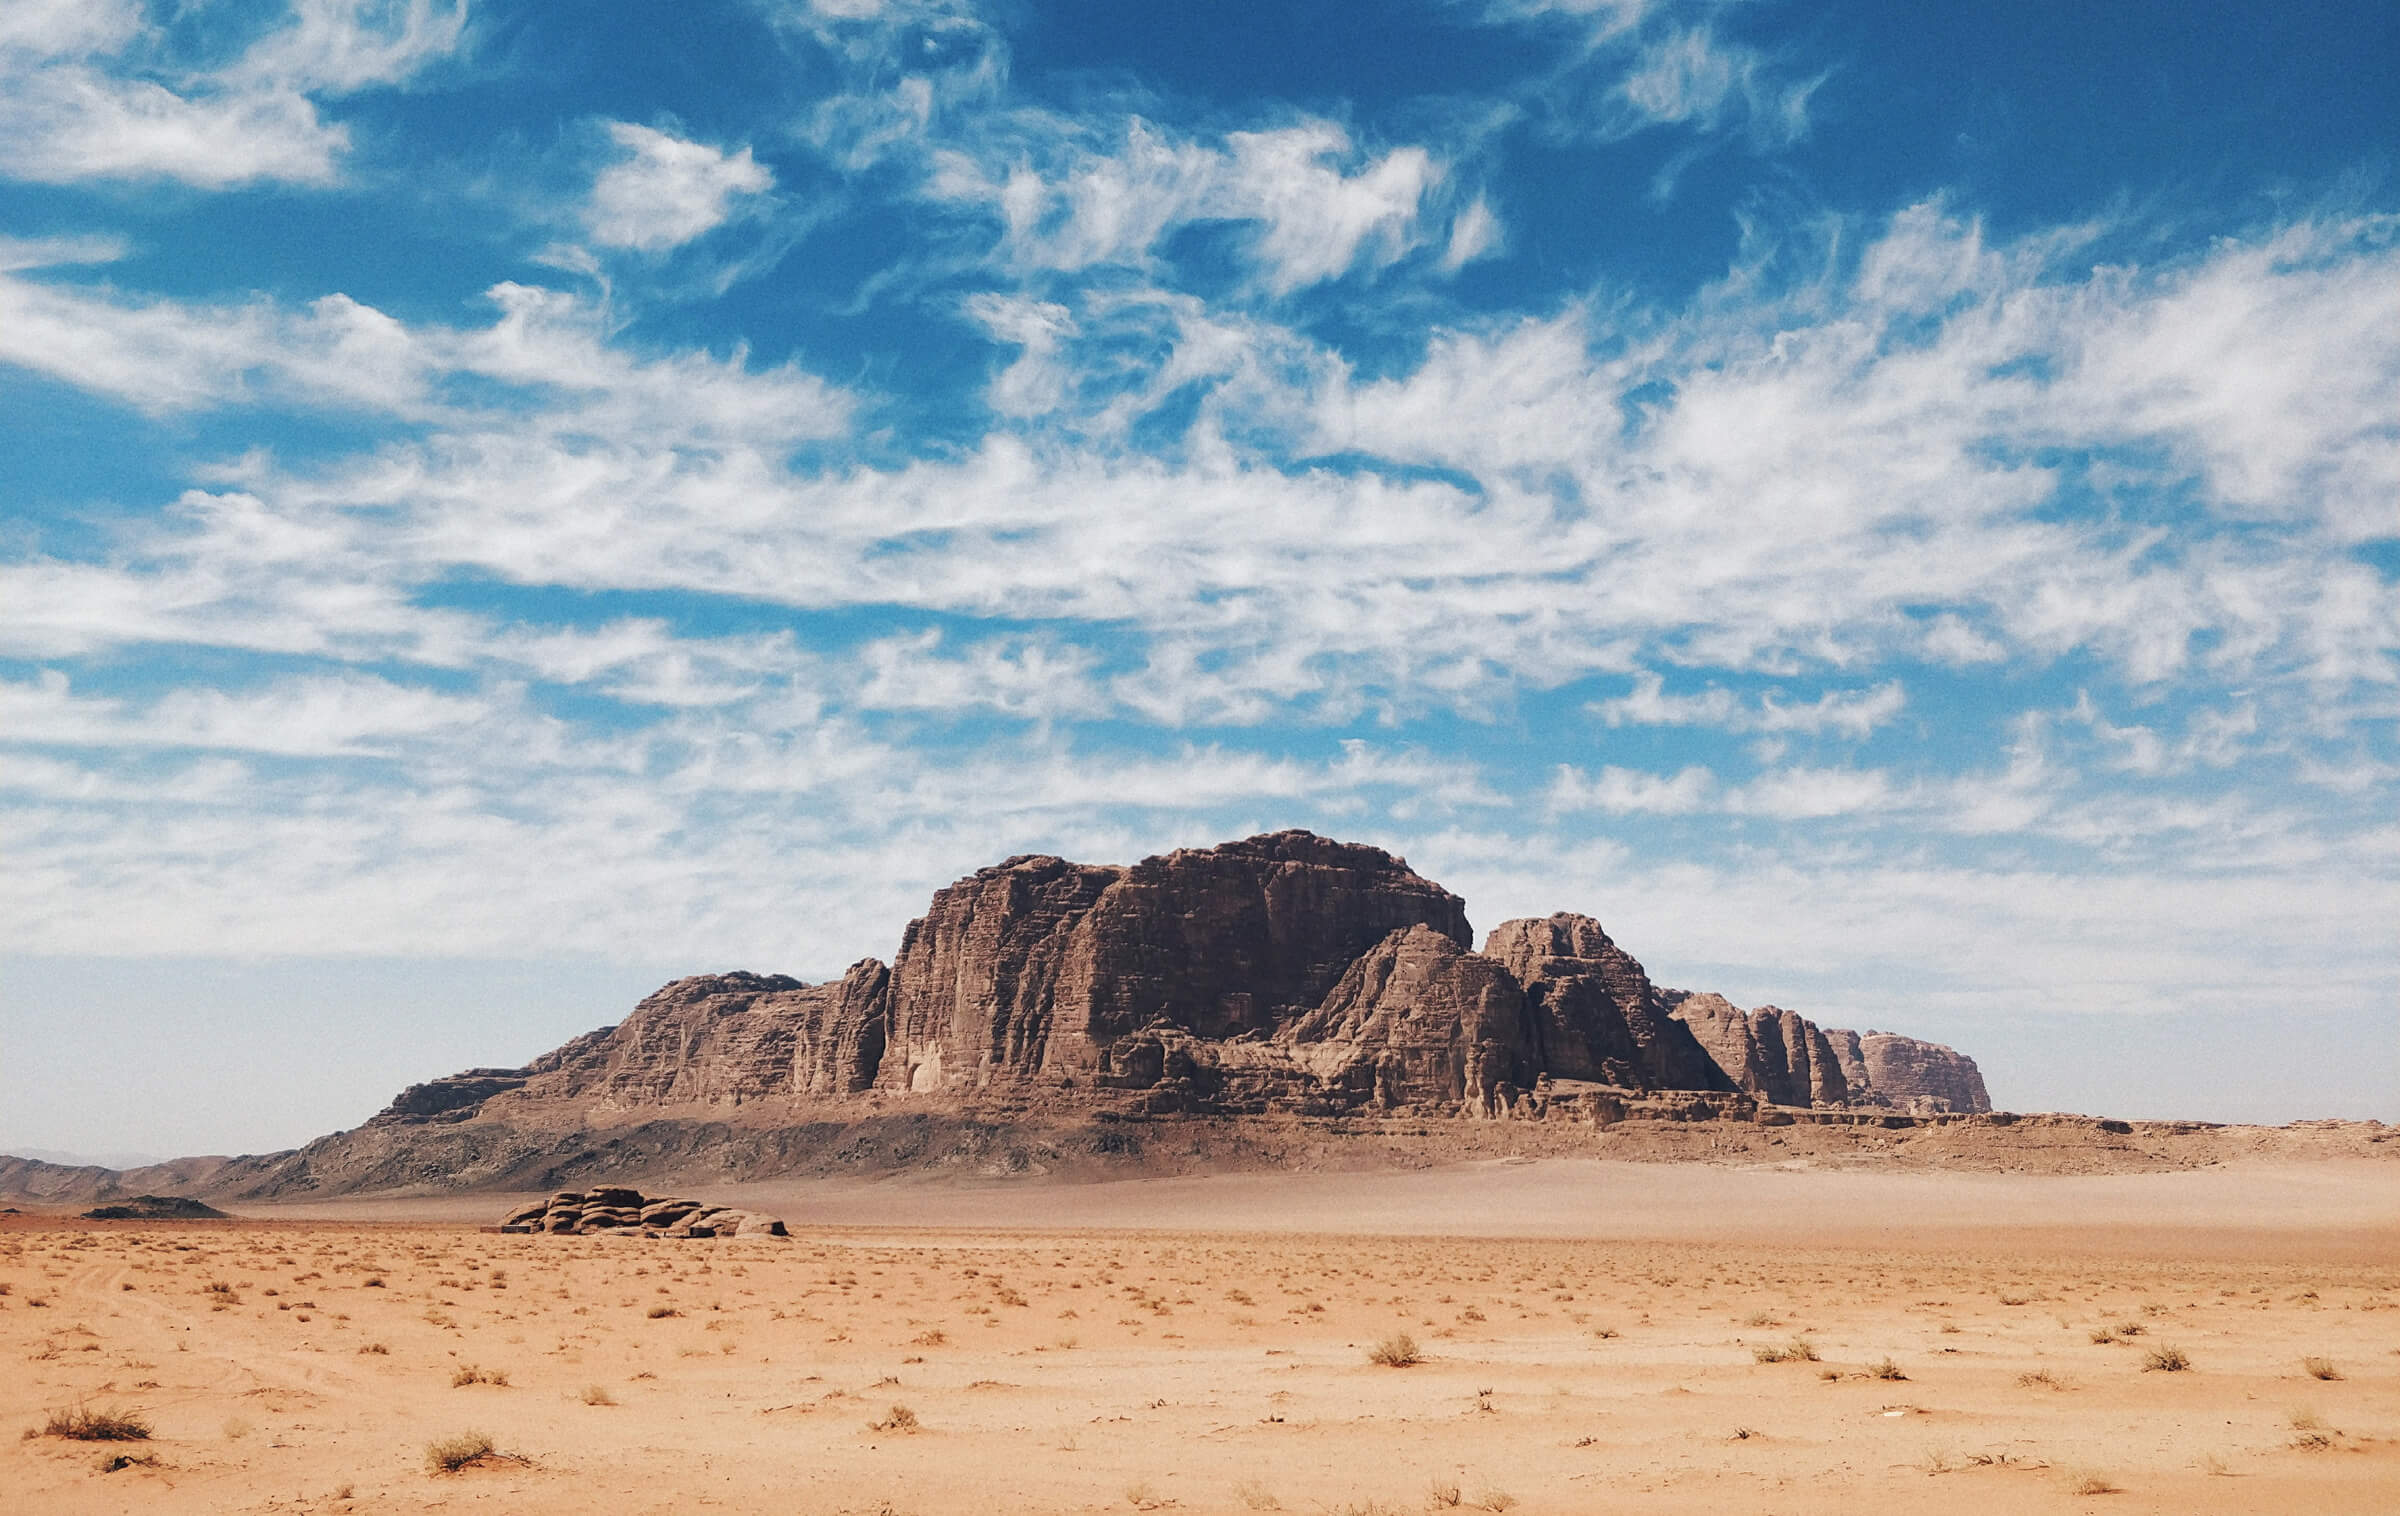 Wadi Rum Desert - Jordan | Photo by Anton Lecock on Unsplash